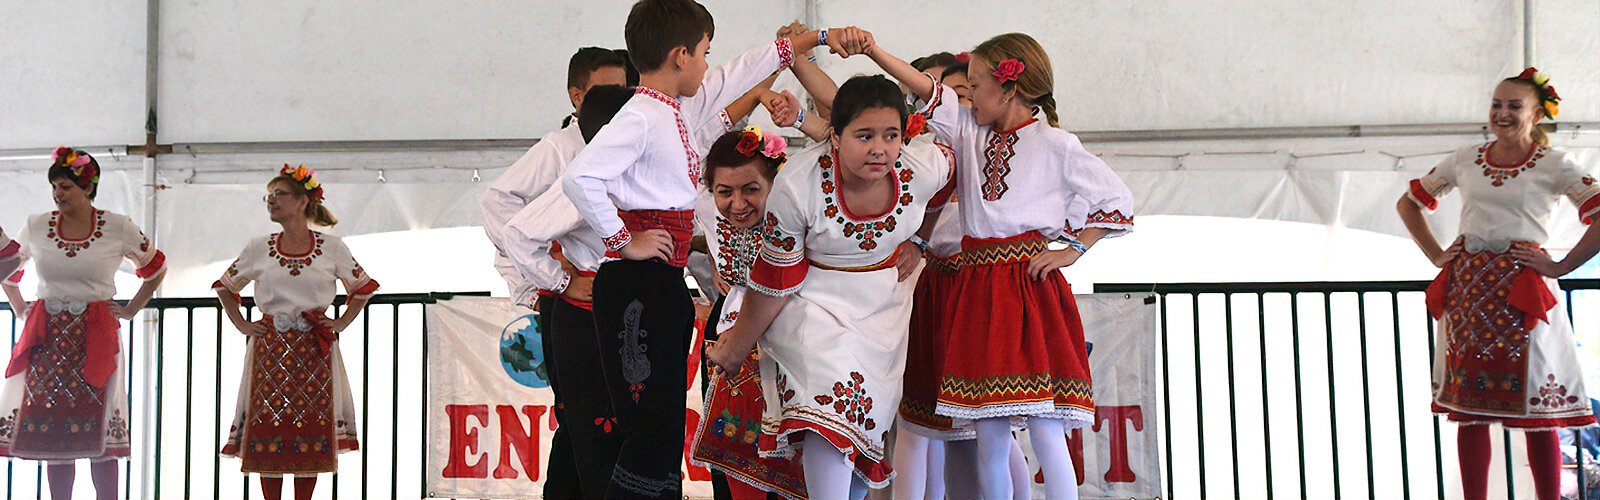 The Bulgarian folk group Sharenitsa performs at the International Folk Fair.